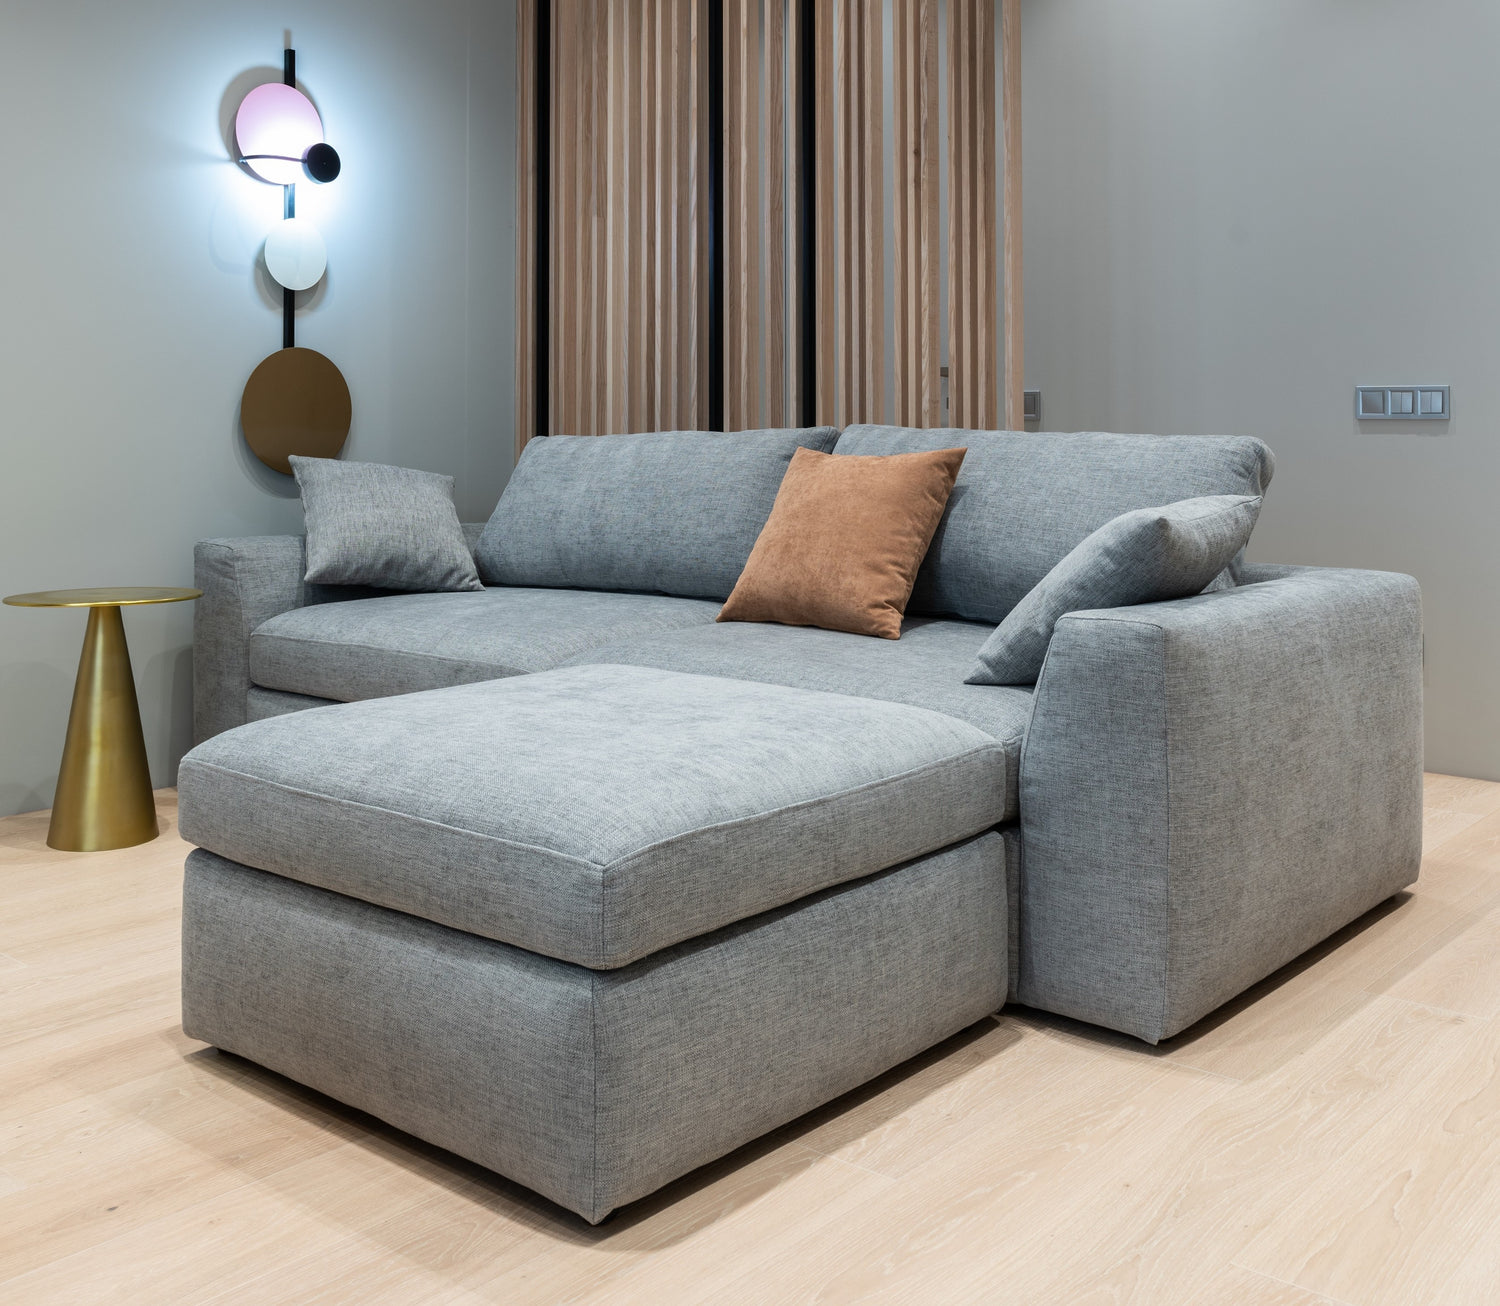 Grey Sofa in a Room